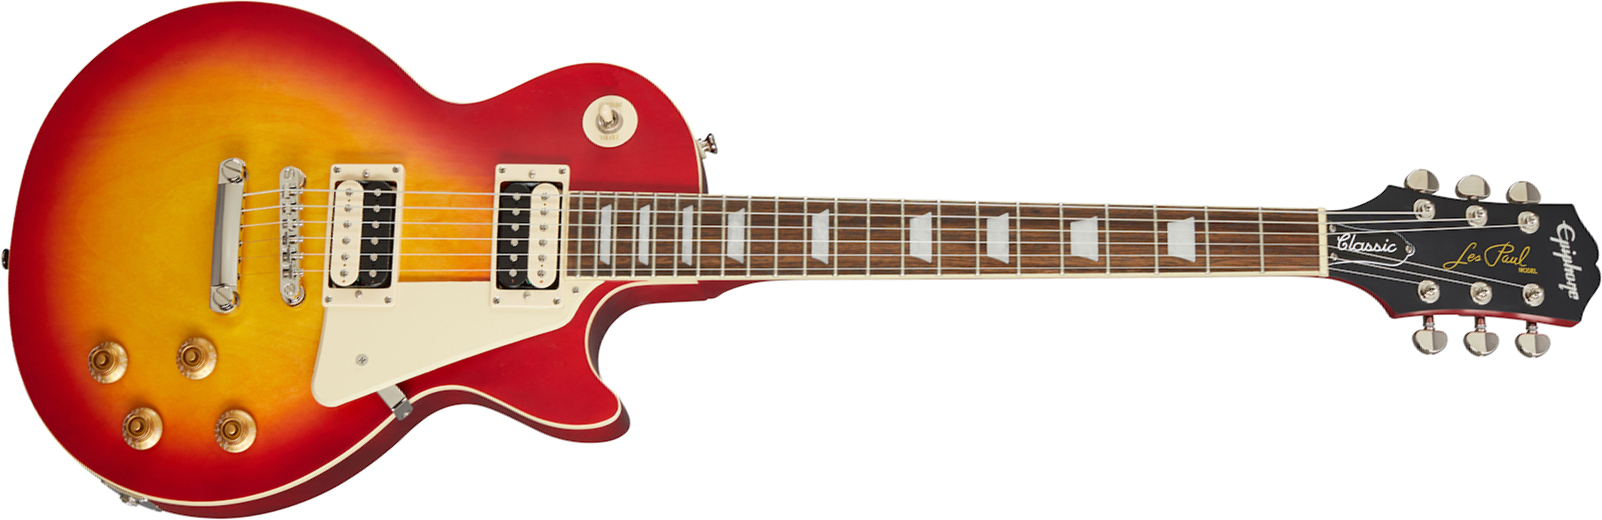 Epiphone Les Paul Classic Worn 2020 Hh Ht Rw - Worn Heritage Cherry Sunburst - Enkel gesneden elektrische gitaar - Main picture